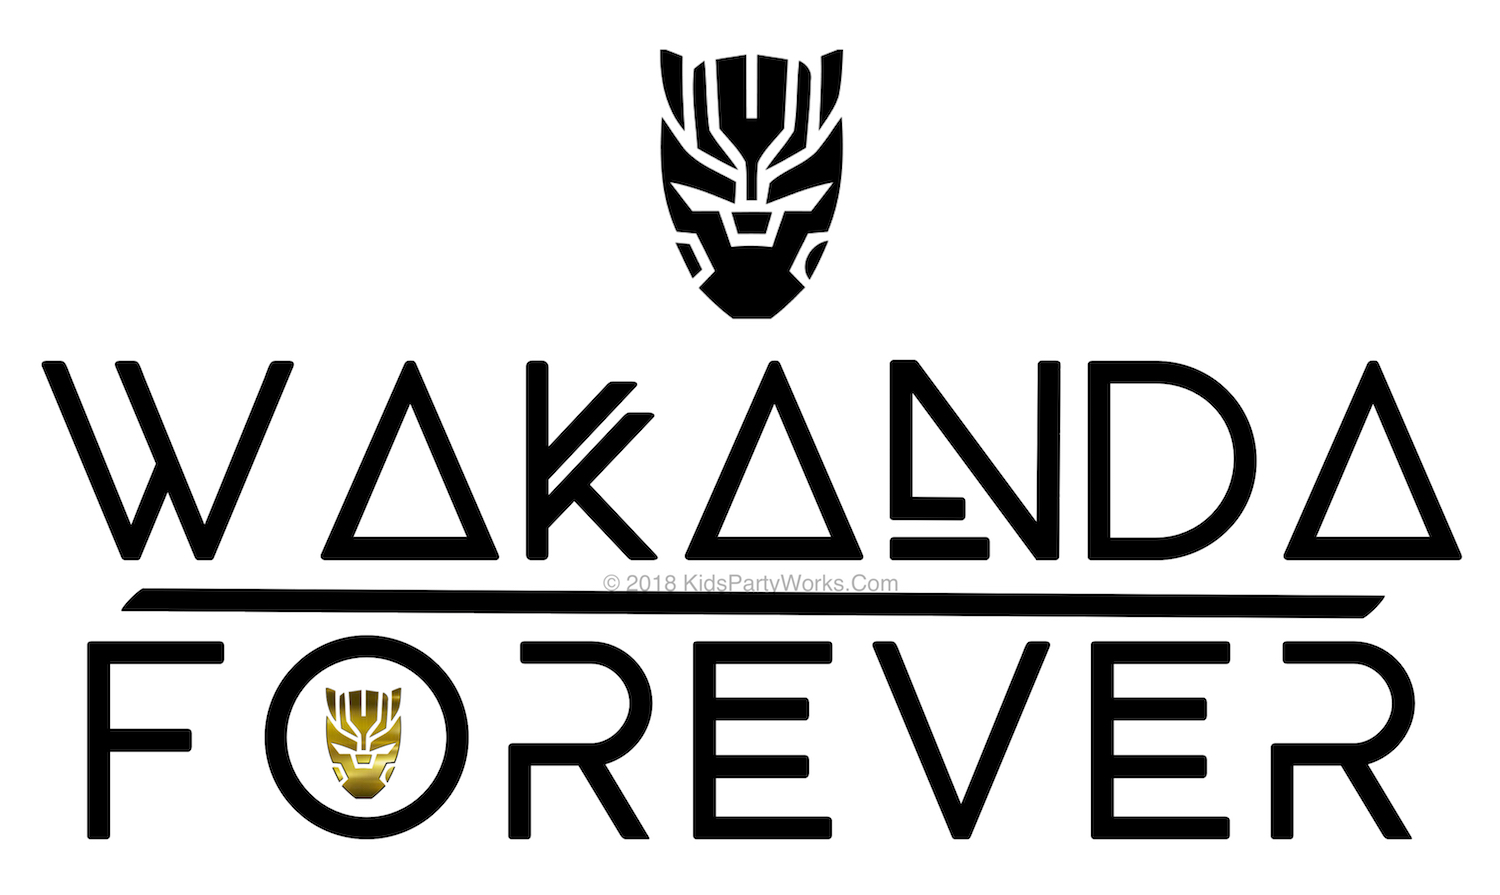 Wakanda Forever font